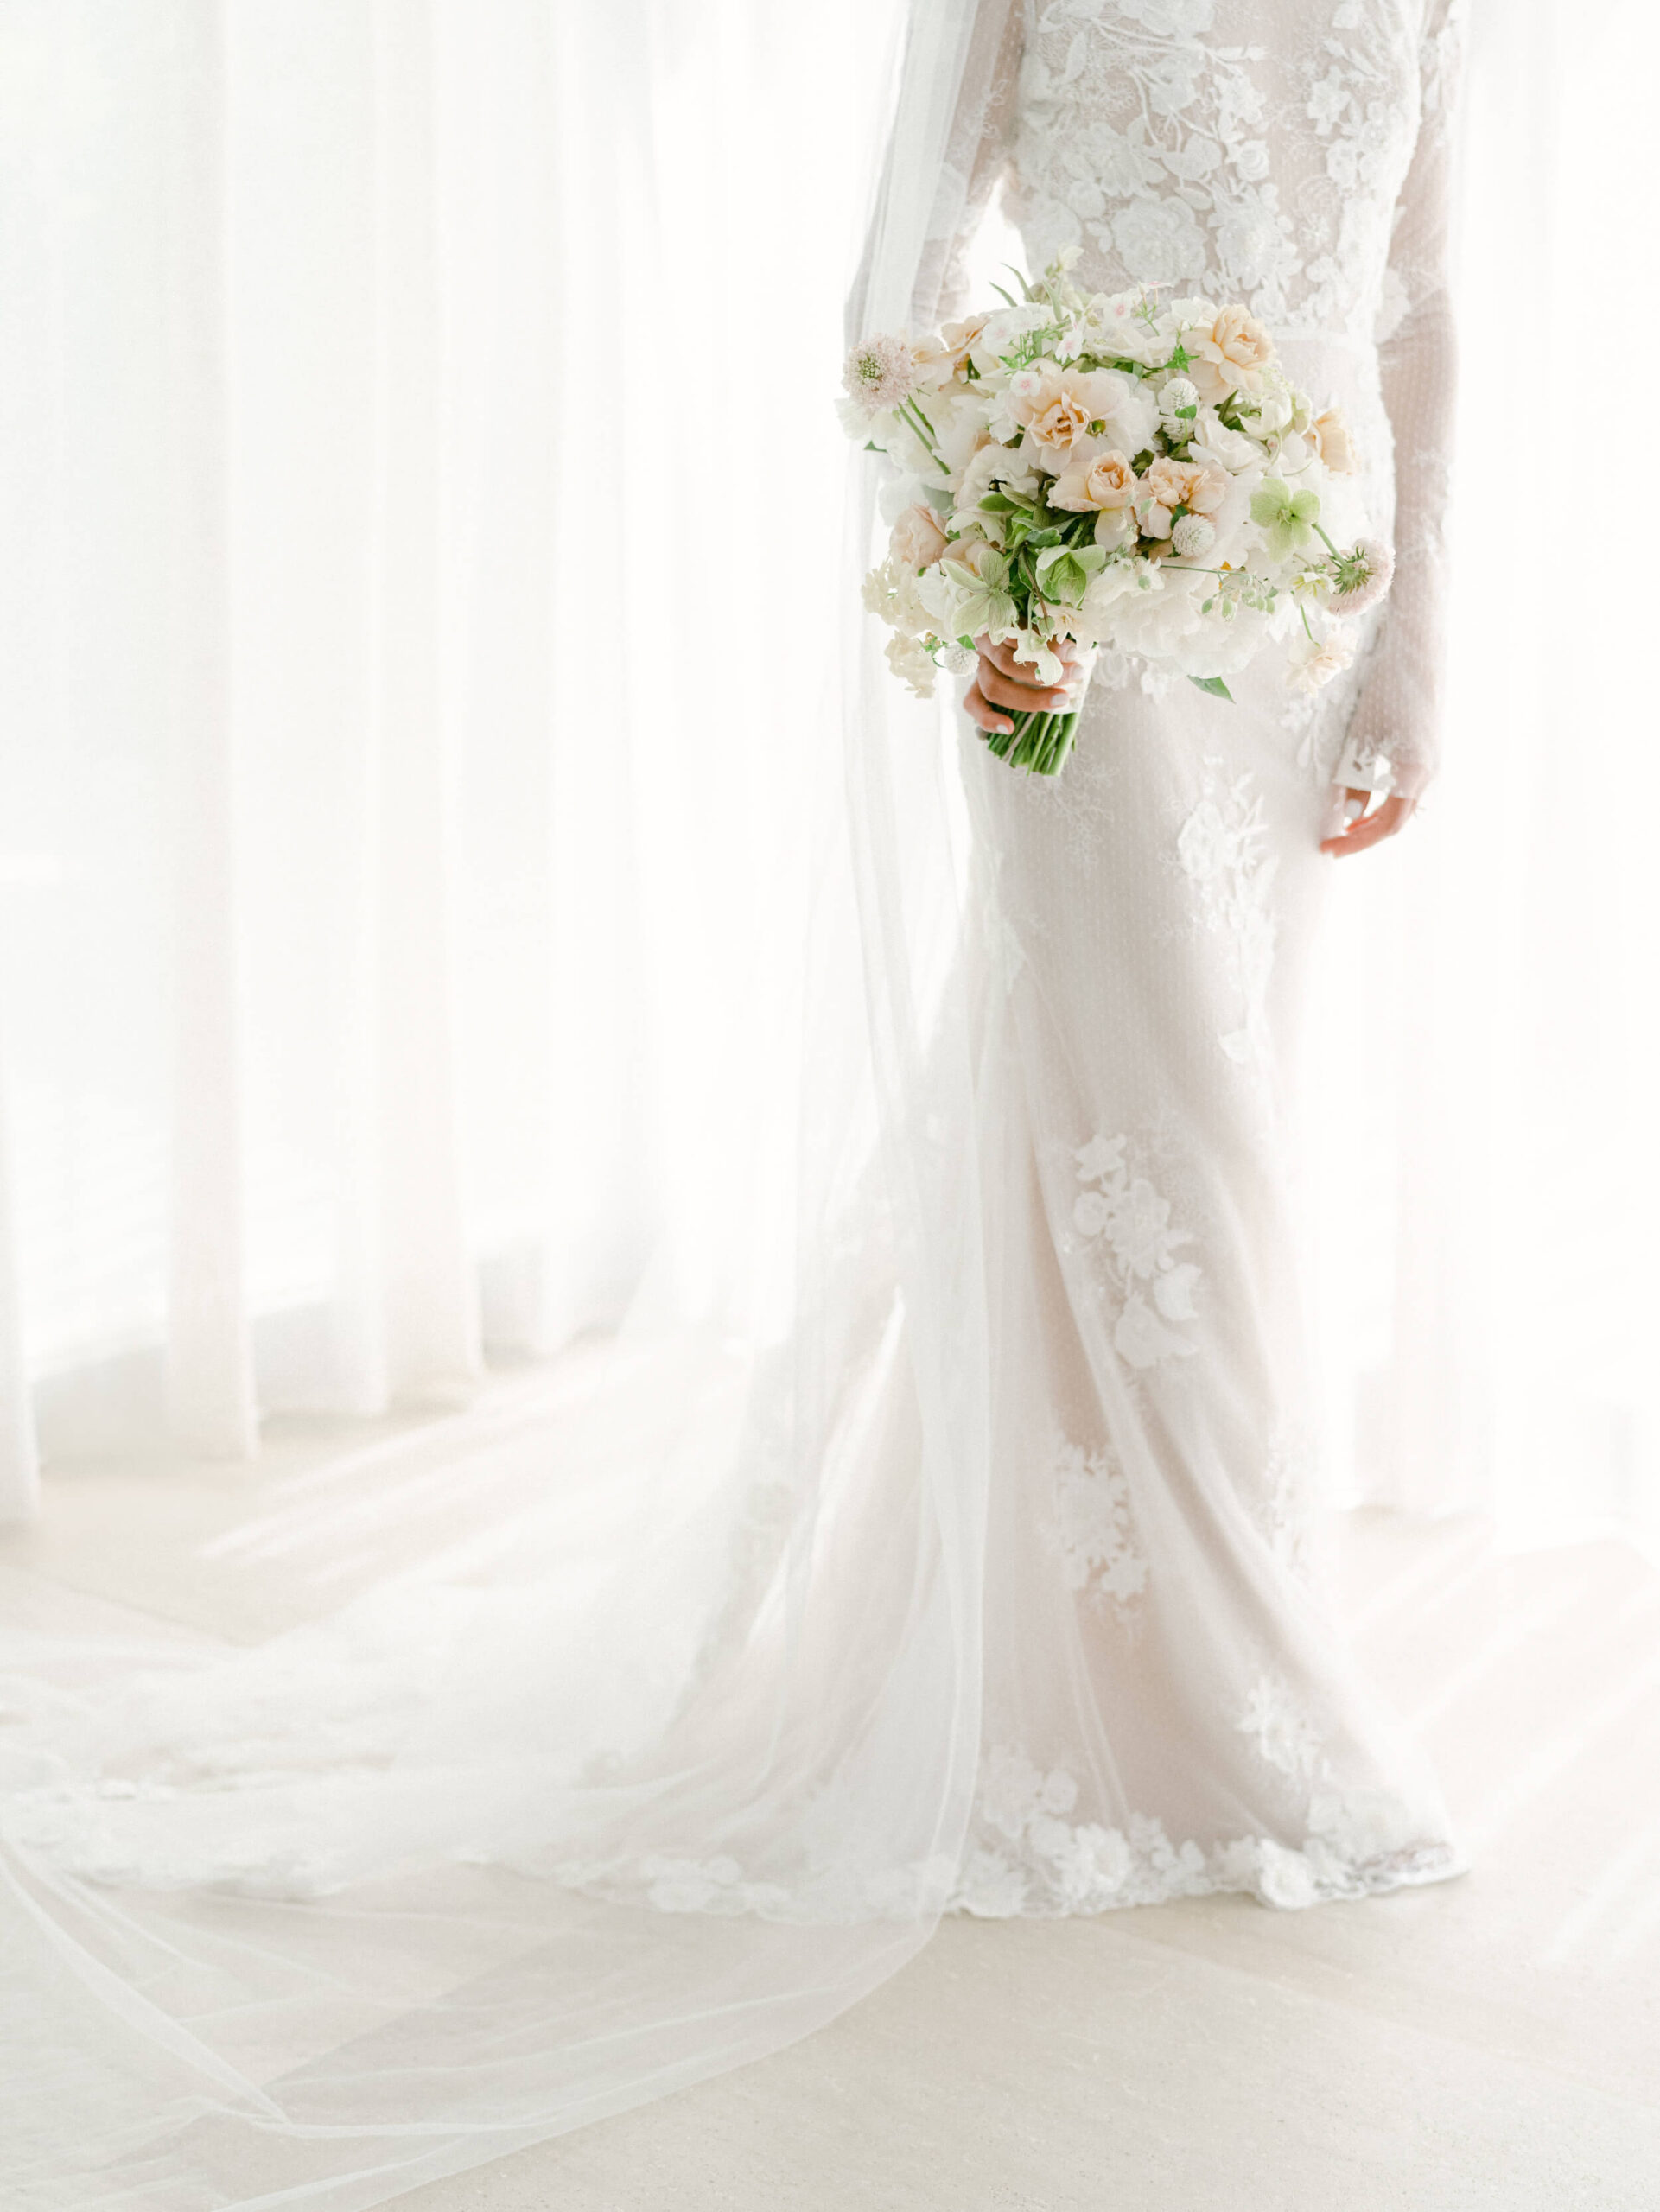 Olga's wedding gown, veil, bouquet